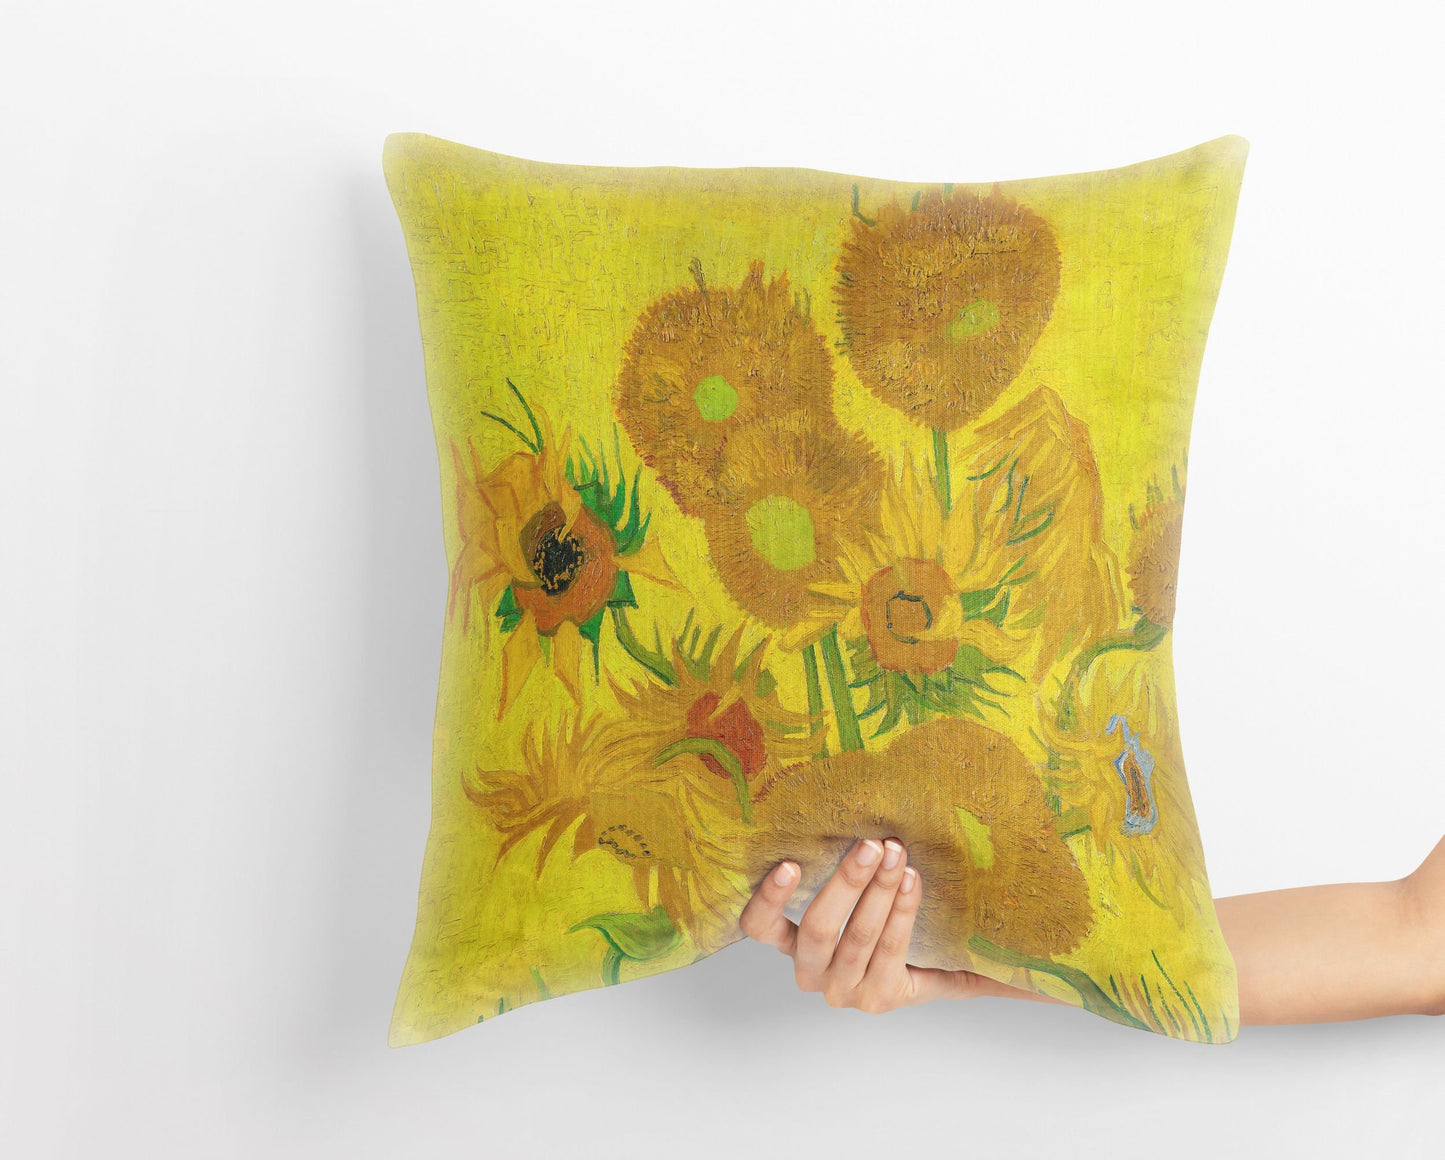 Vincent Van Gogh Sunflowers, Throw Pillow, Abstract Throw Pillow, Soft Pillow Cases, Bright Yellow Pillow Home Decor Pillow, Farmhouse Decor